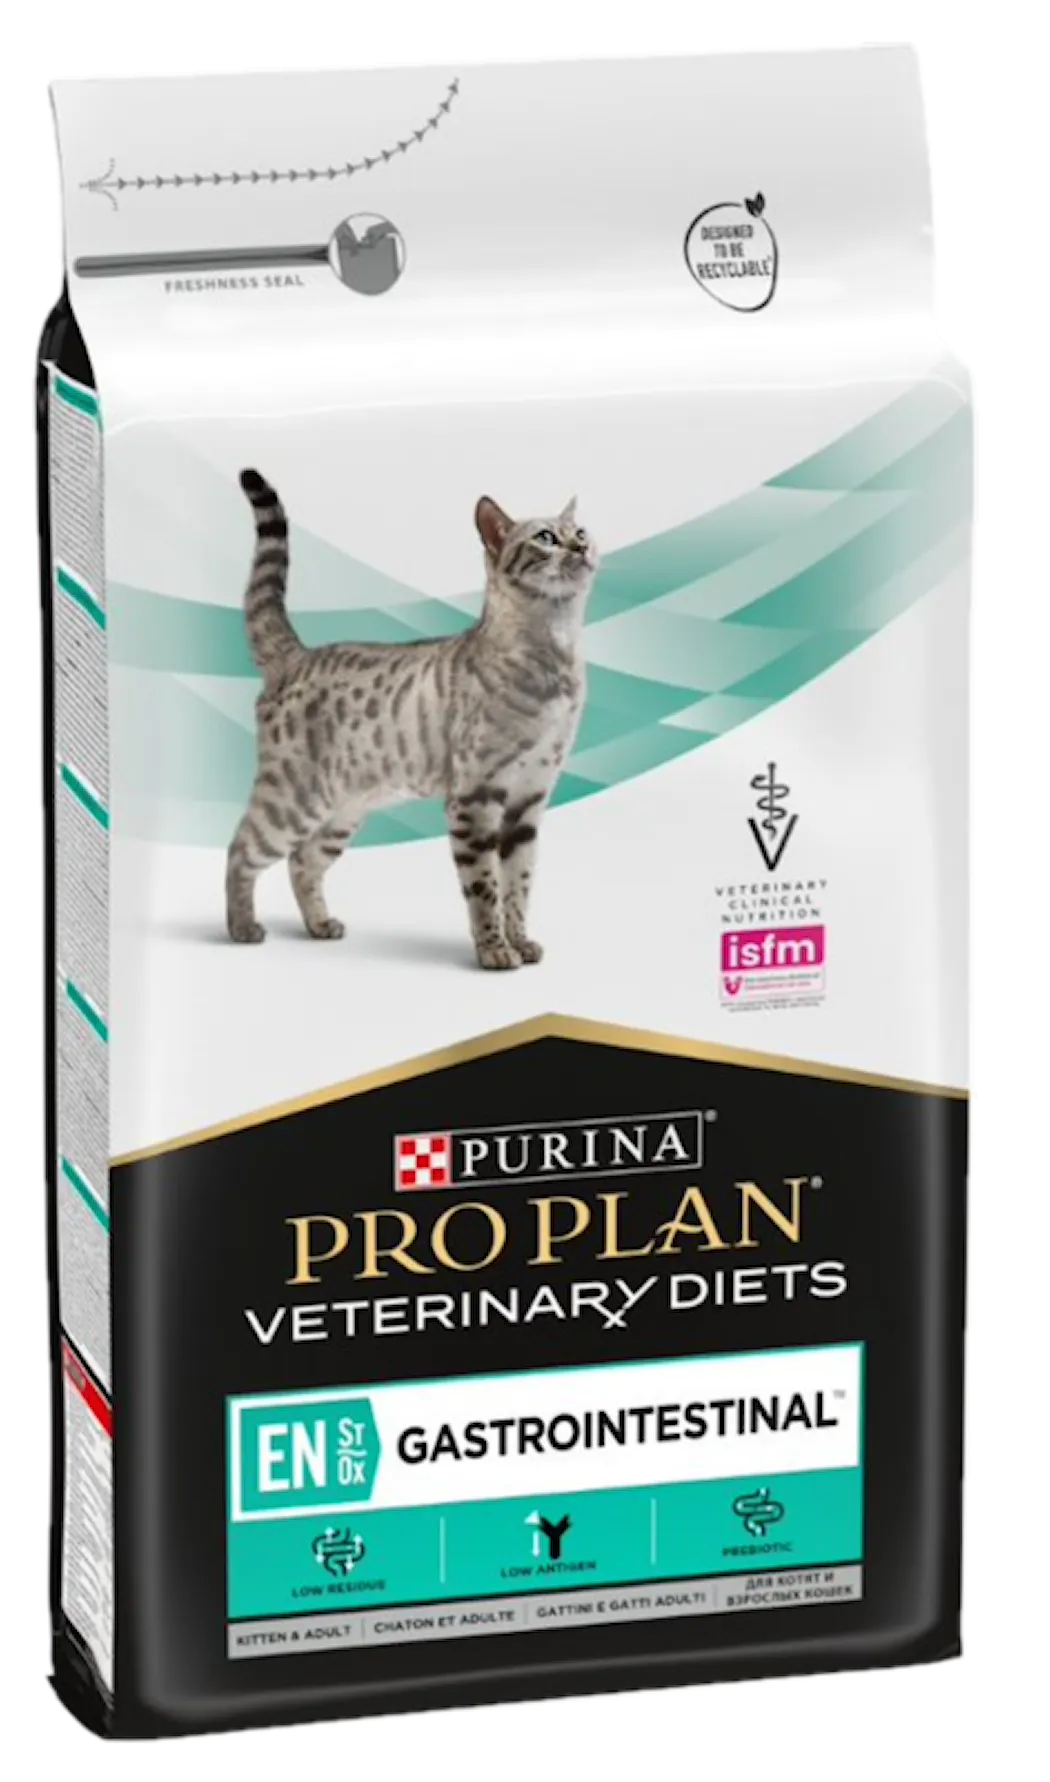 Purina Pro Plan Veterinary Diets Feline EN Gastro Enteric Cat Formula 5 kg